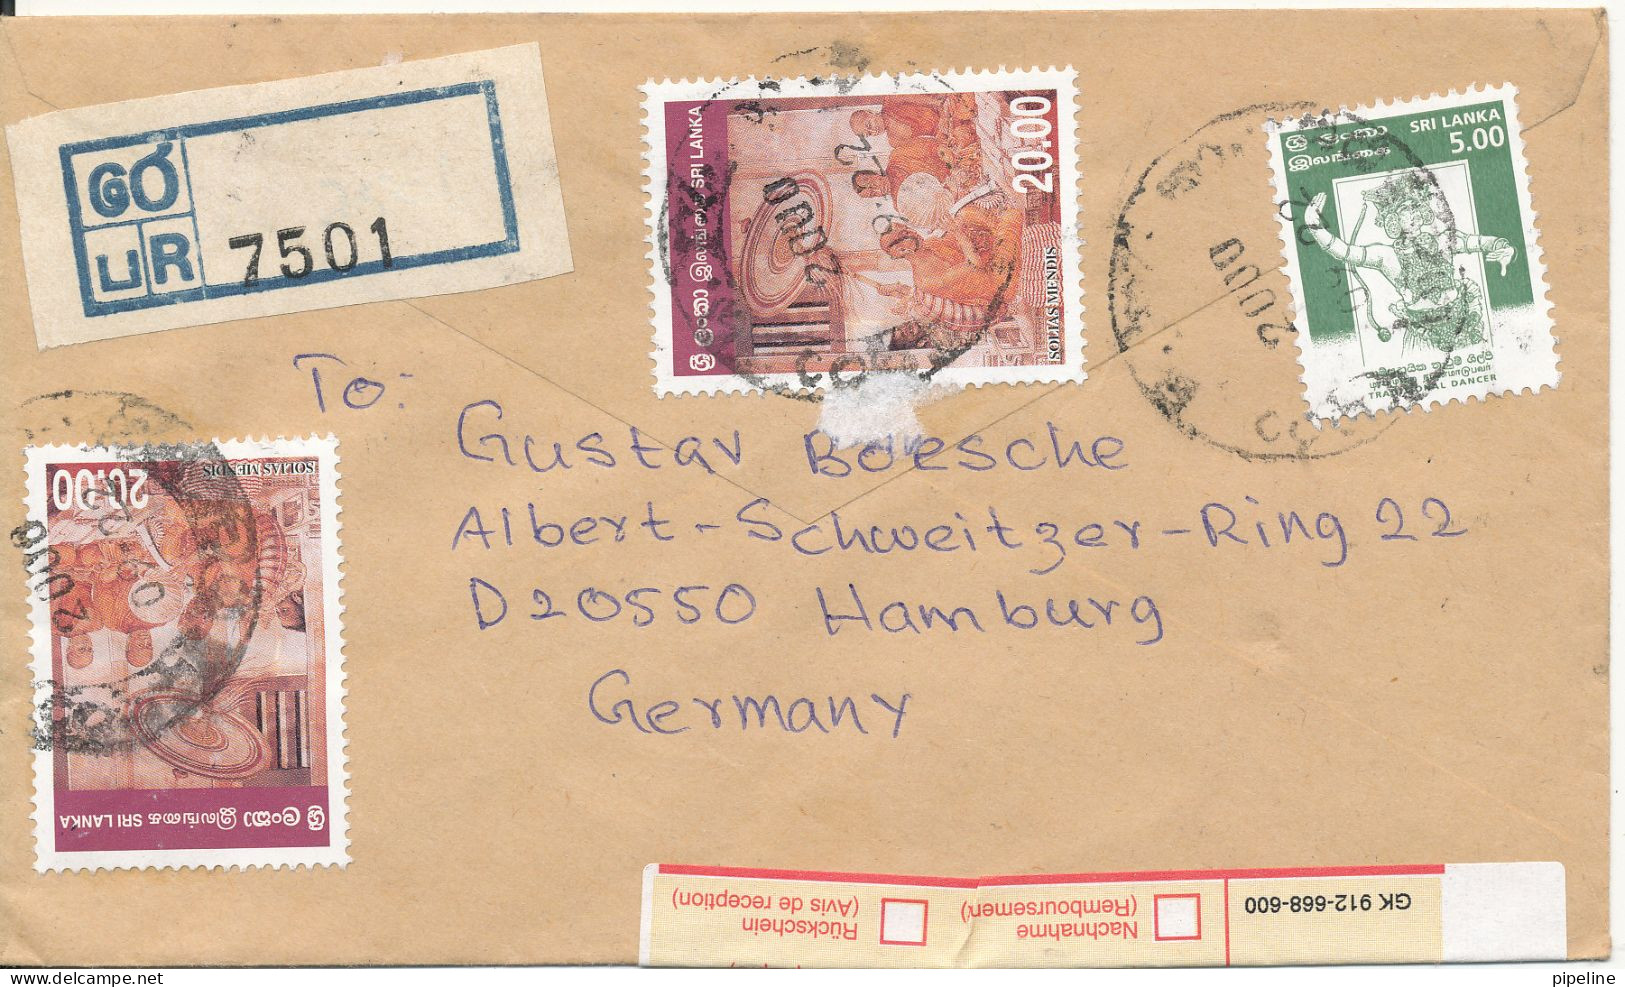 Sri Lanka Registered Cover Sent To Germany 22-9-2000 - Guatemala